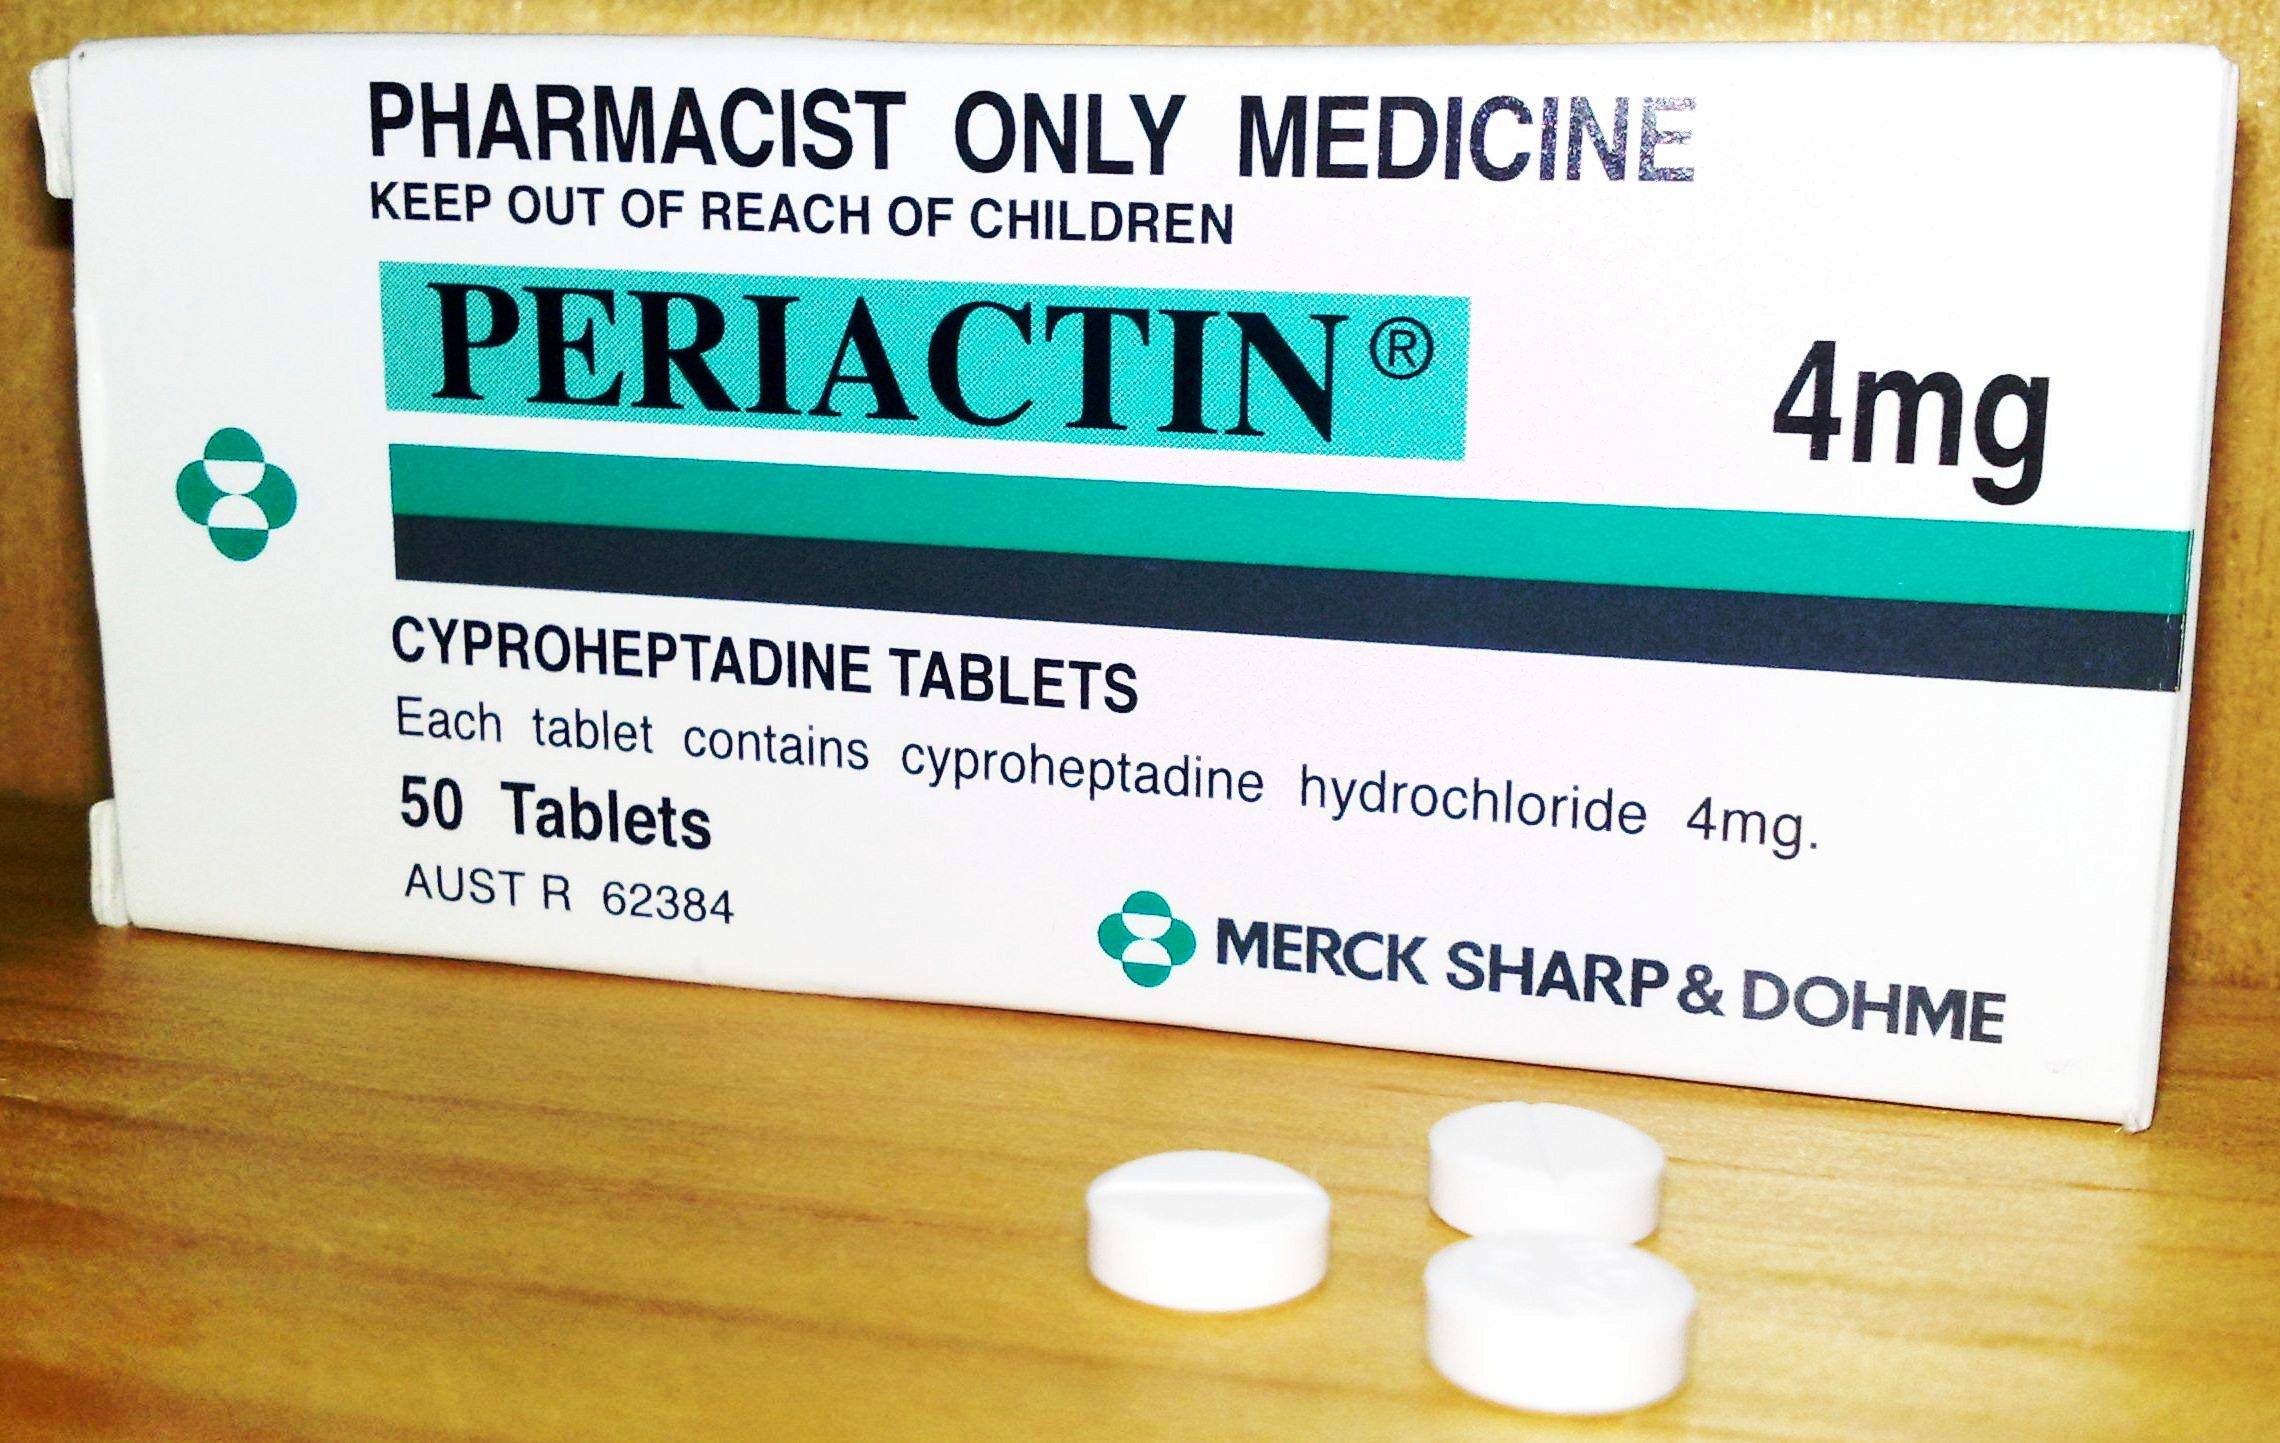 Do U Need A Prescription For Cyproheptadine